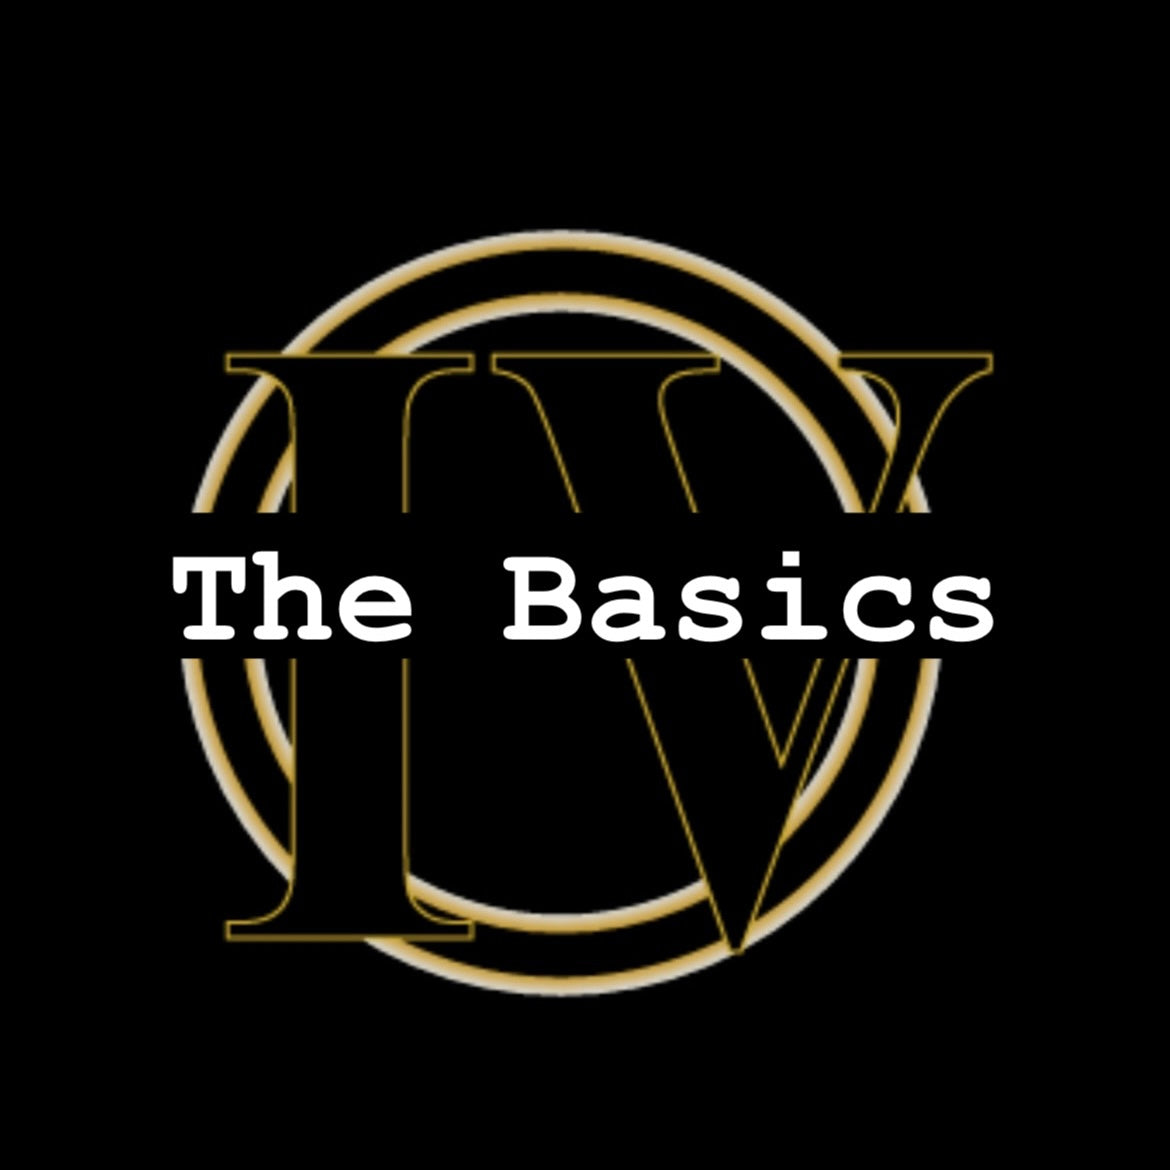 The Basics